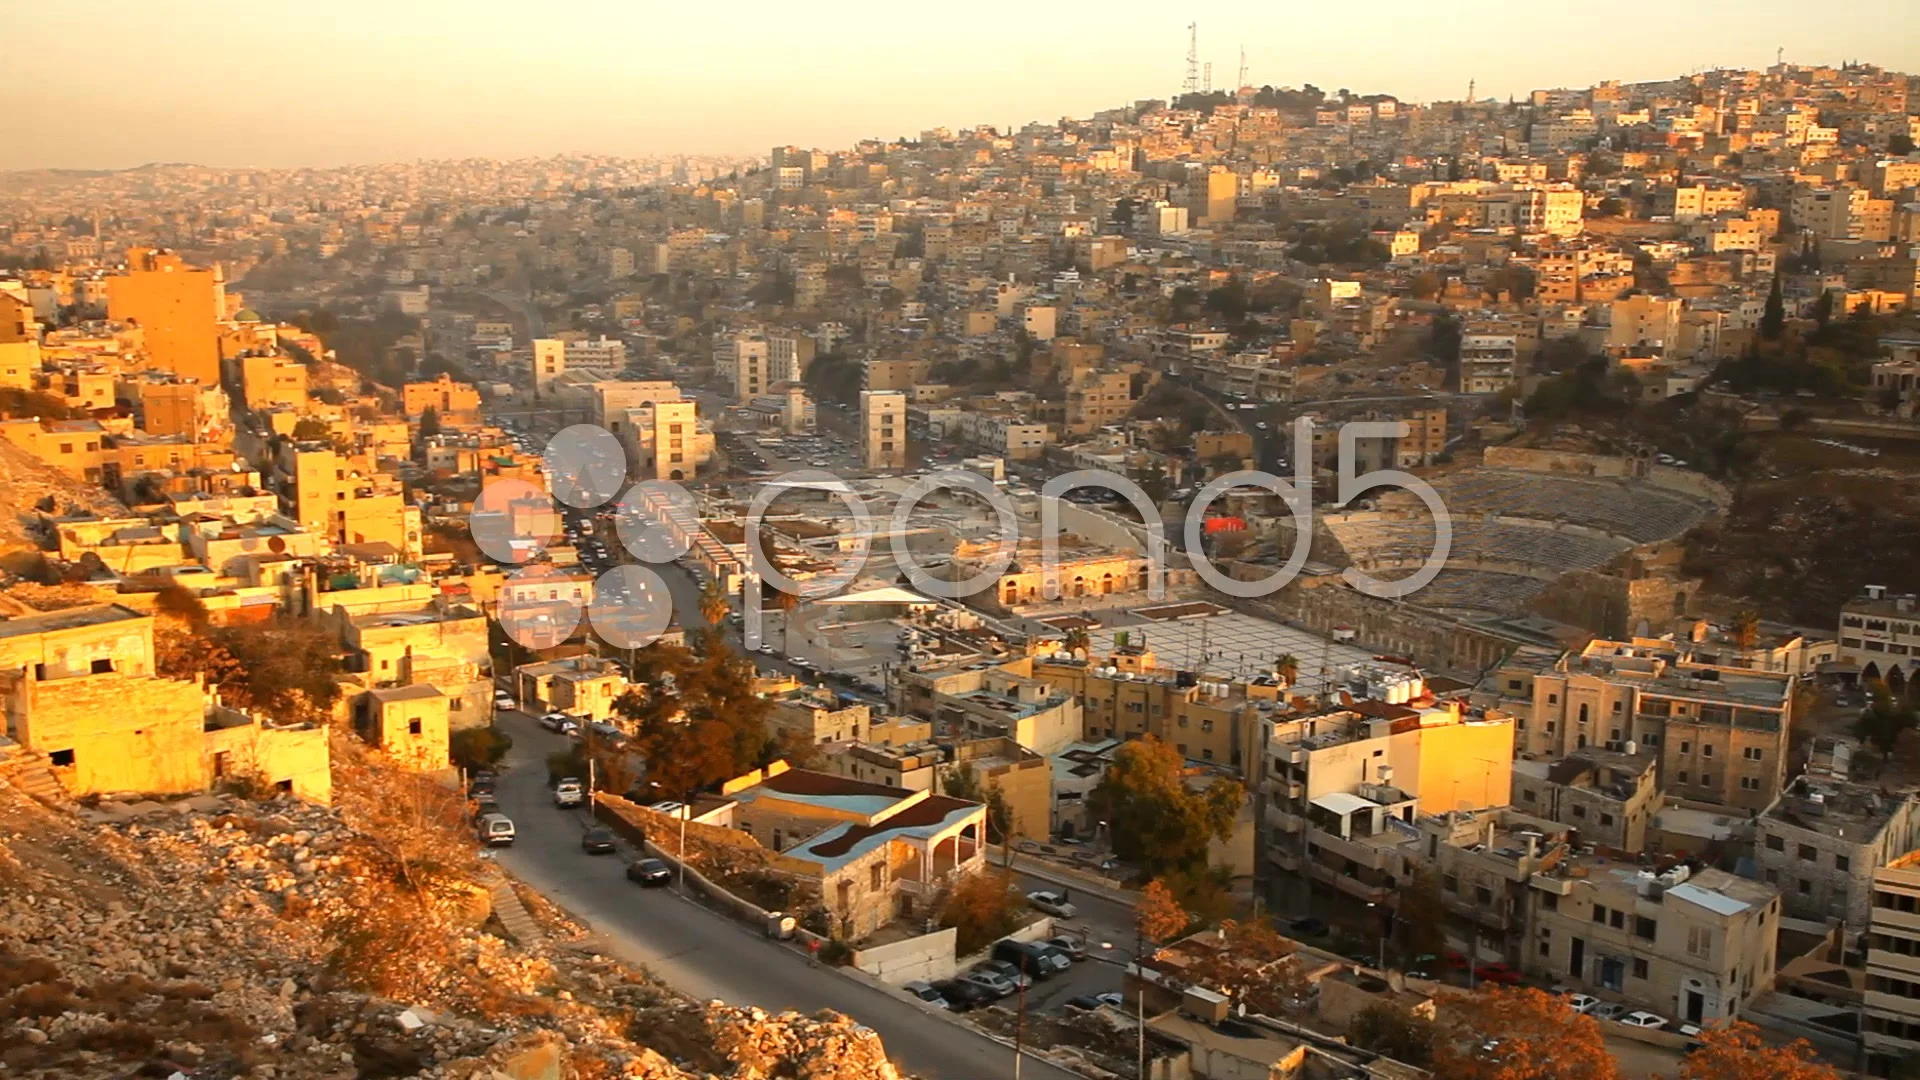 Amman - of Jordan | Video | Pond5